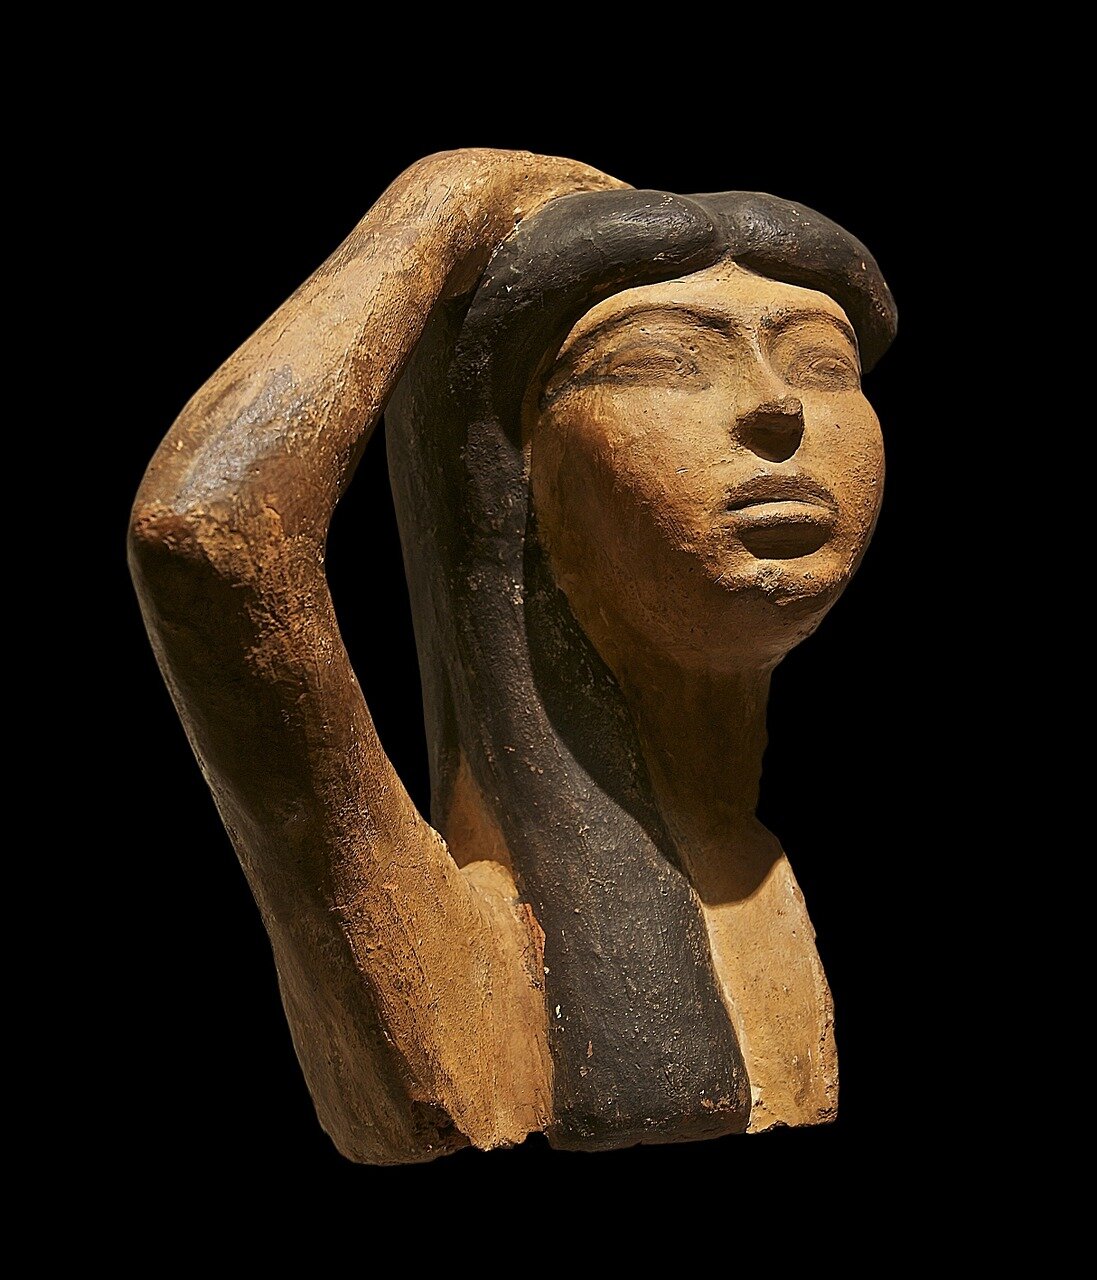 beautiful ancient egyptian women